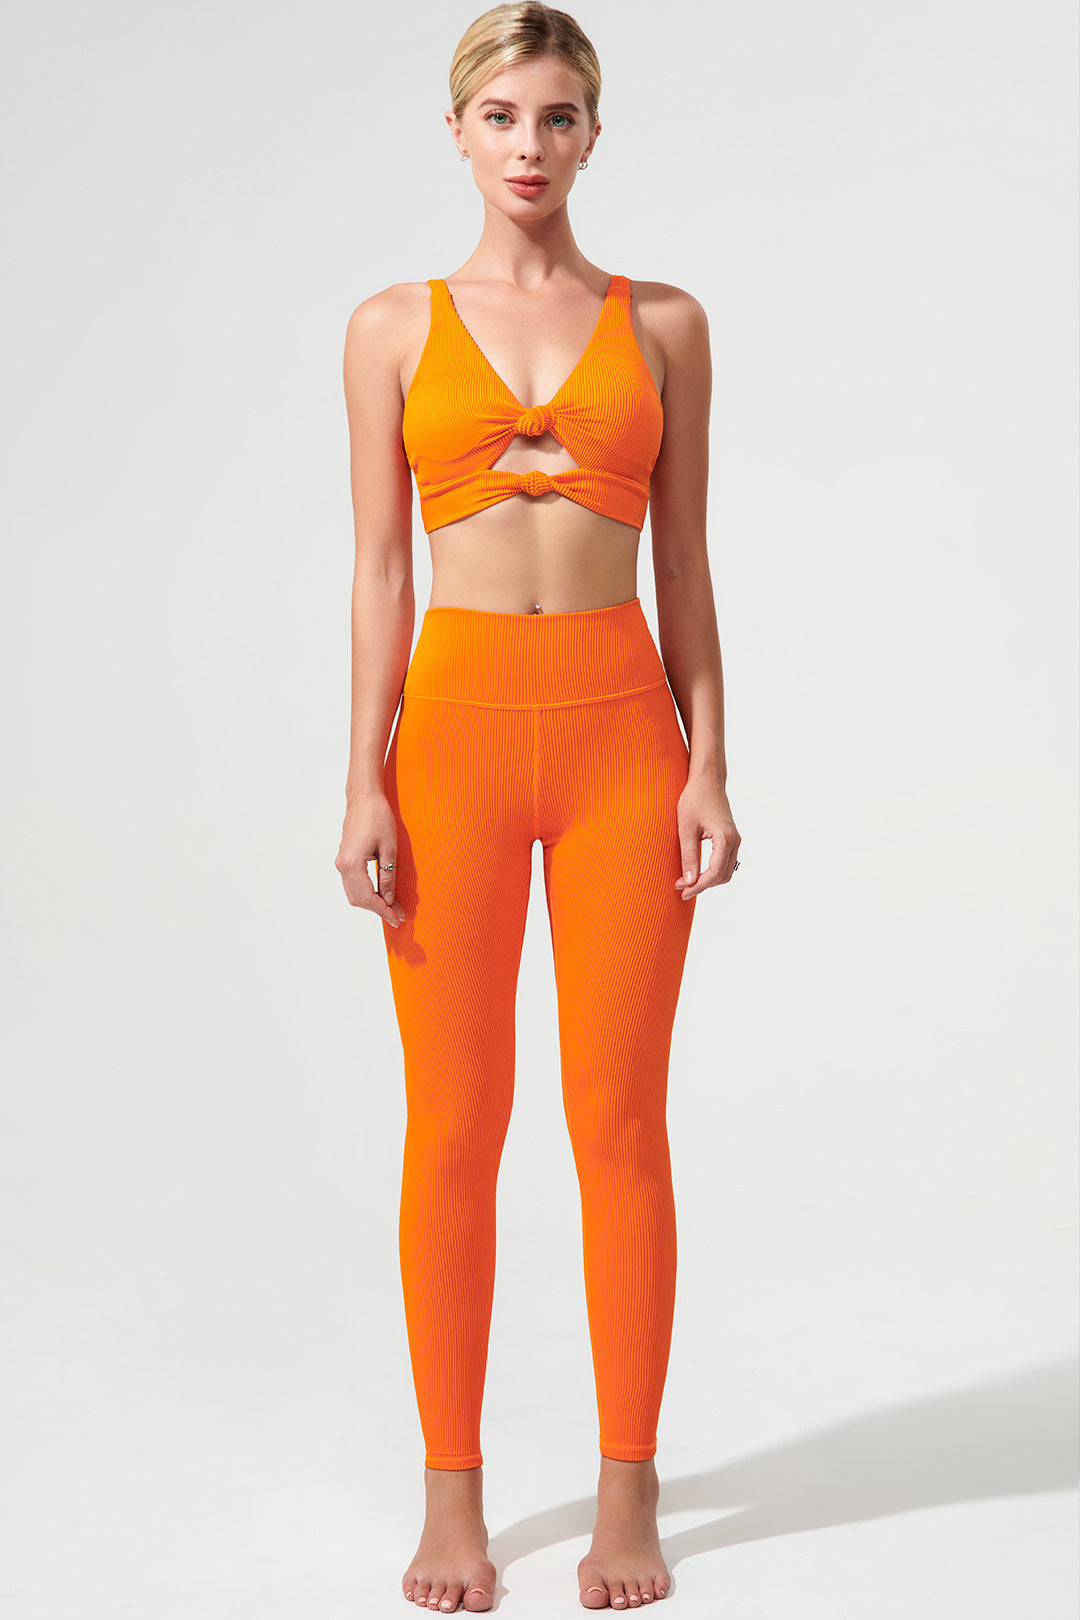 Fleuri Aris women's bra in tangerine orange, a vibrant and stylish addition to your wardrobe.